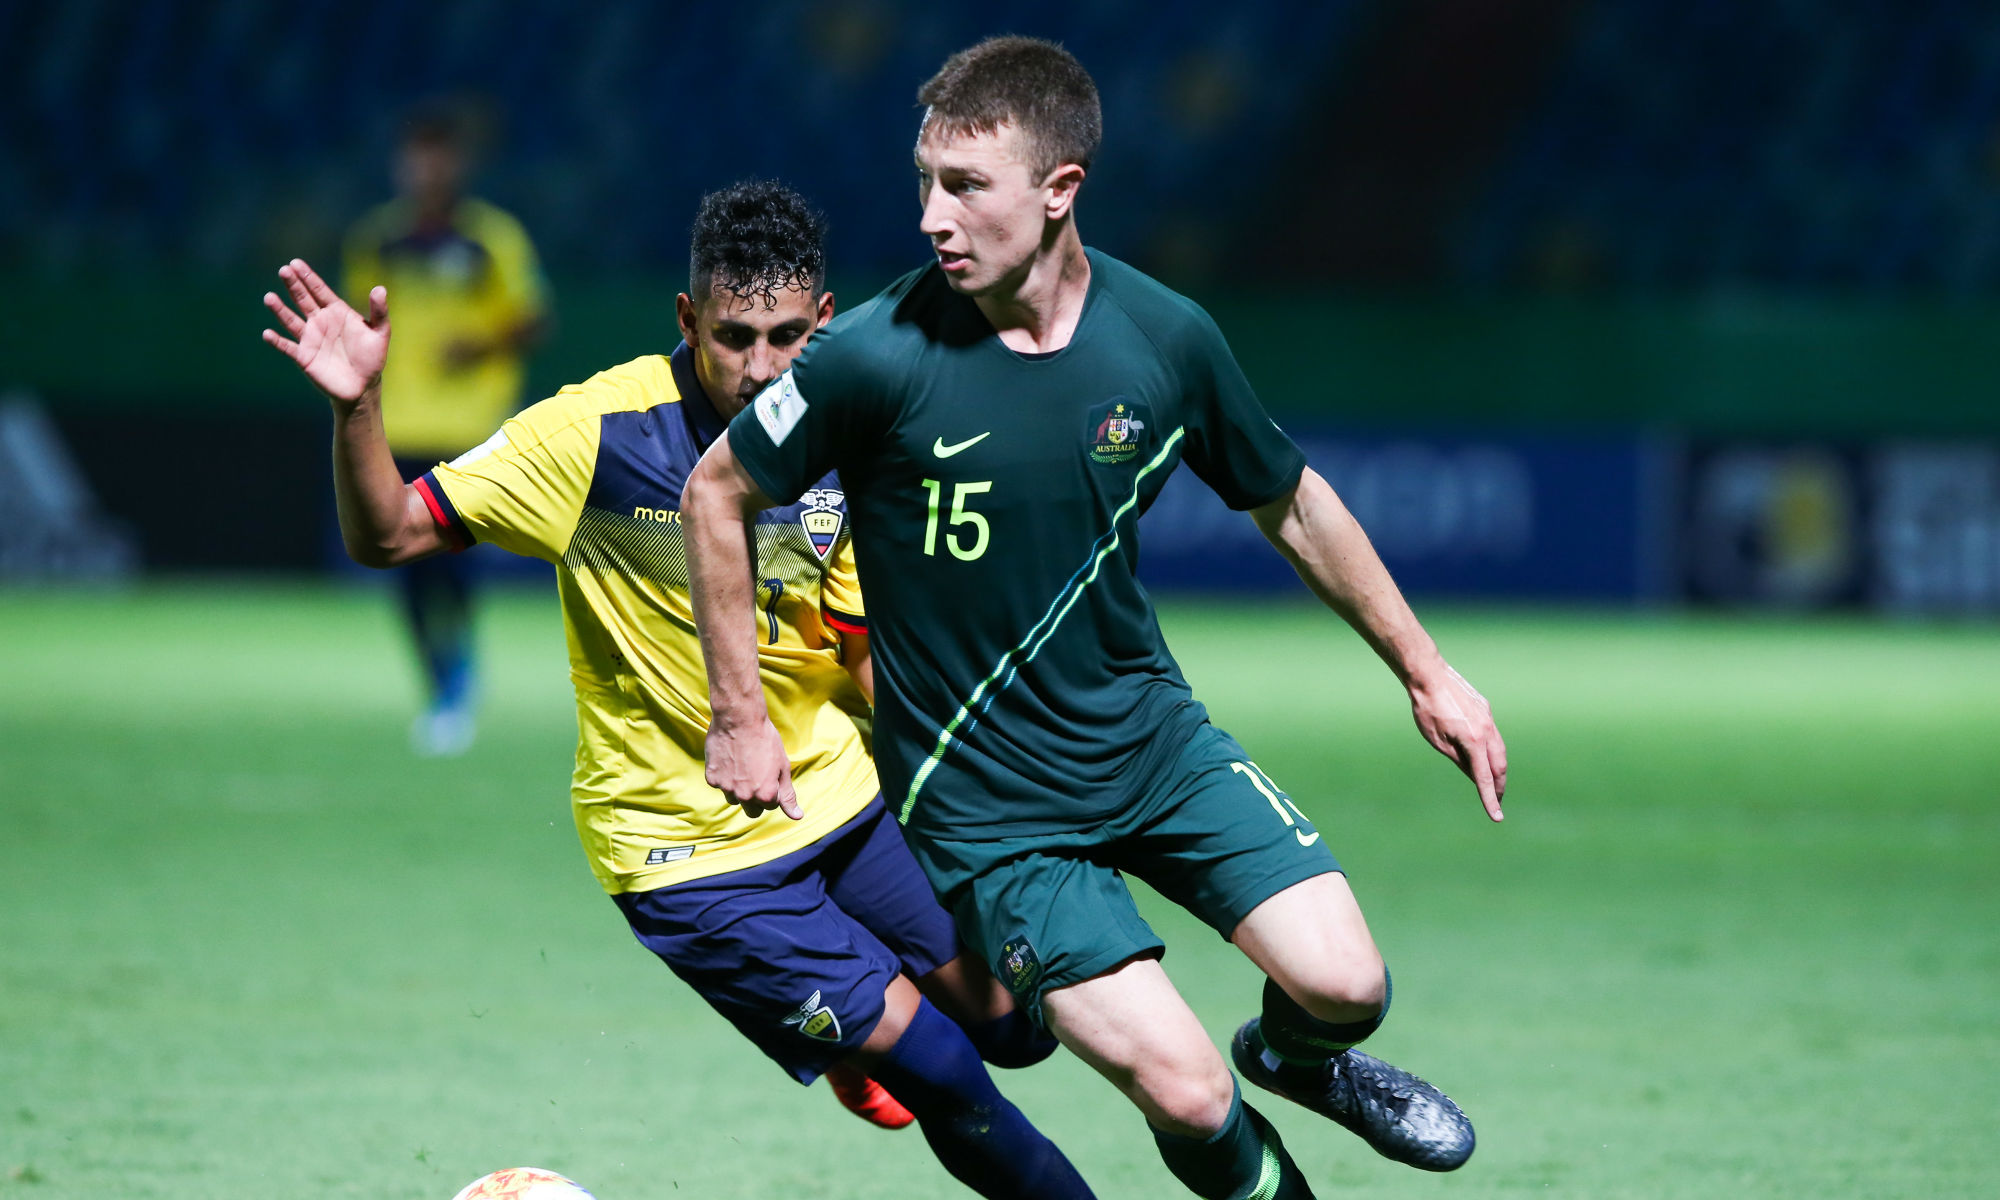 Sydney FC defender Anton Mlinaric on the ball against Ecuador at the FIFA U-17 World Cup